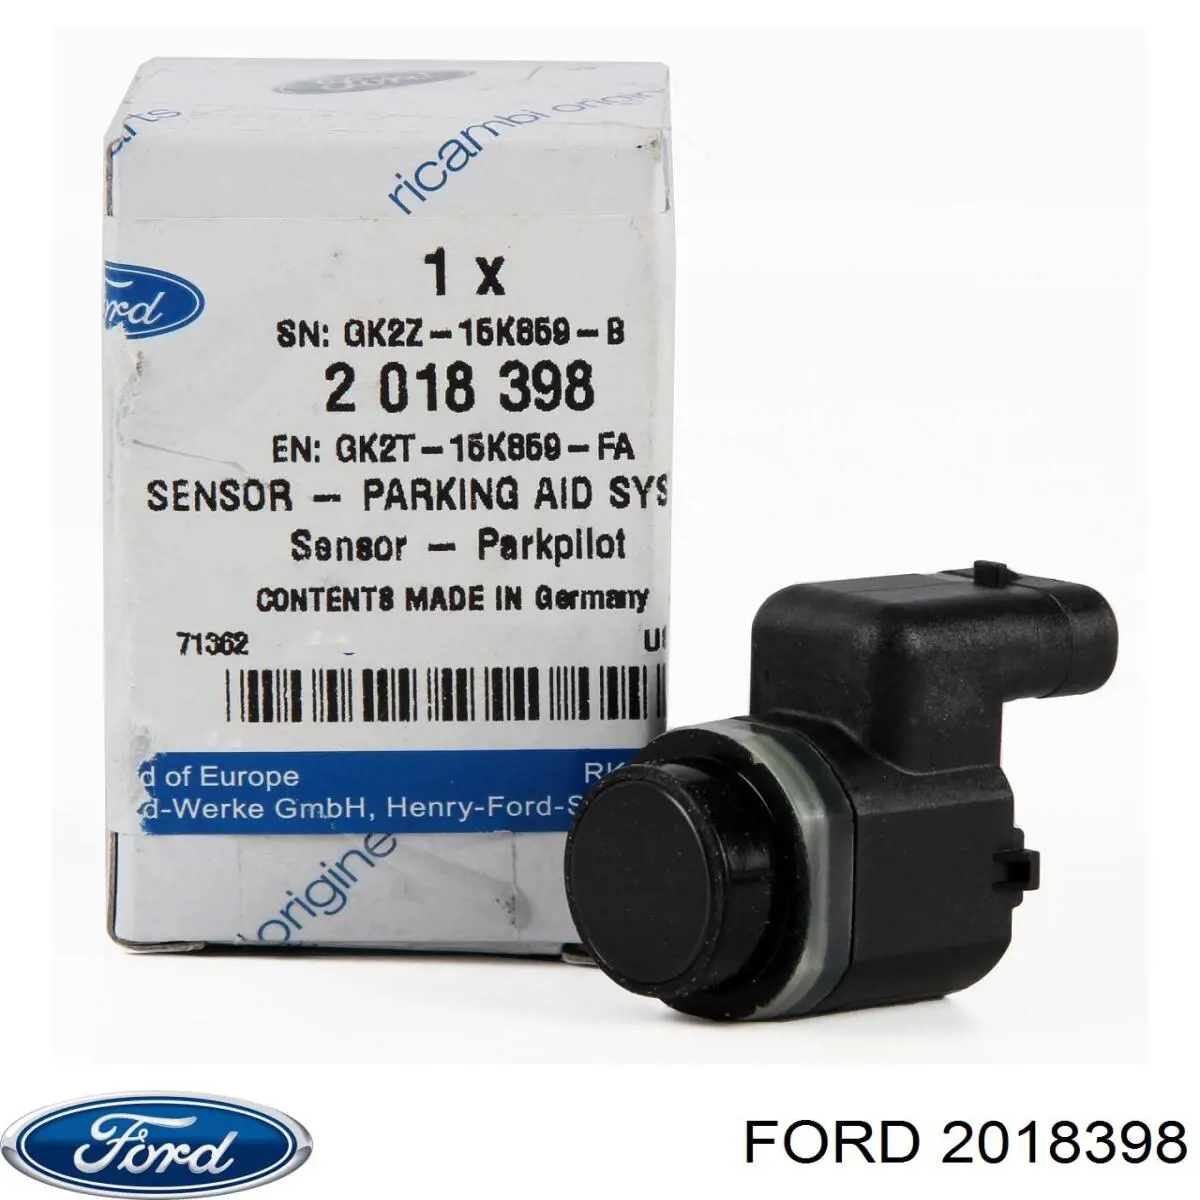 2018398 Ford датчик сигнализации парковки (парктроник передний)